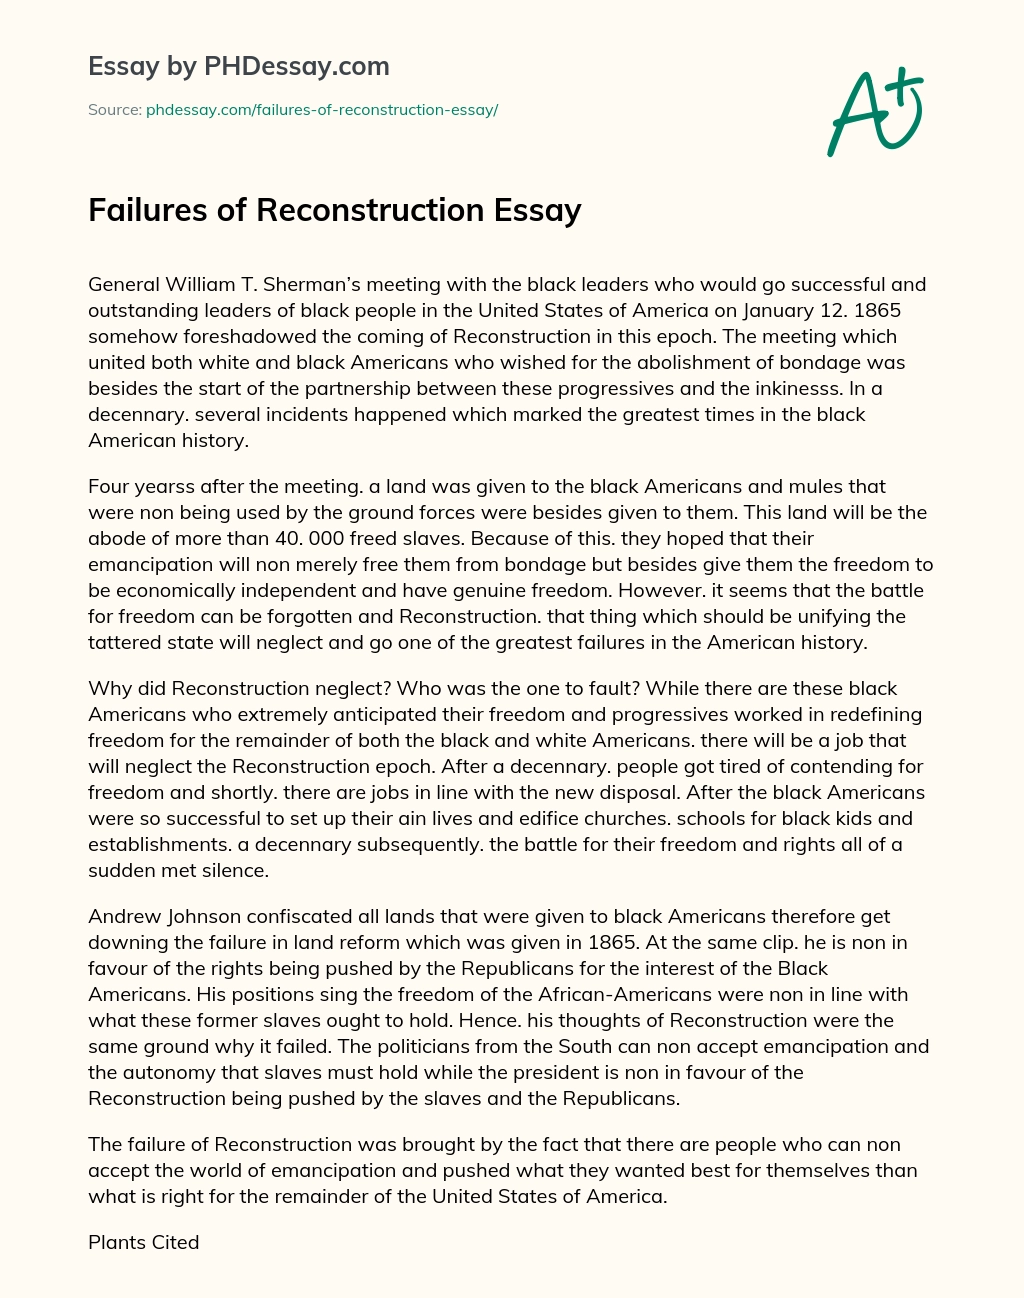 Failures of Reconstruction Essay essay